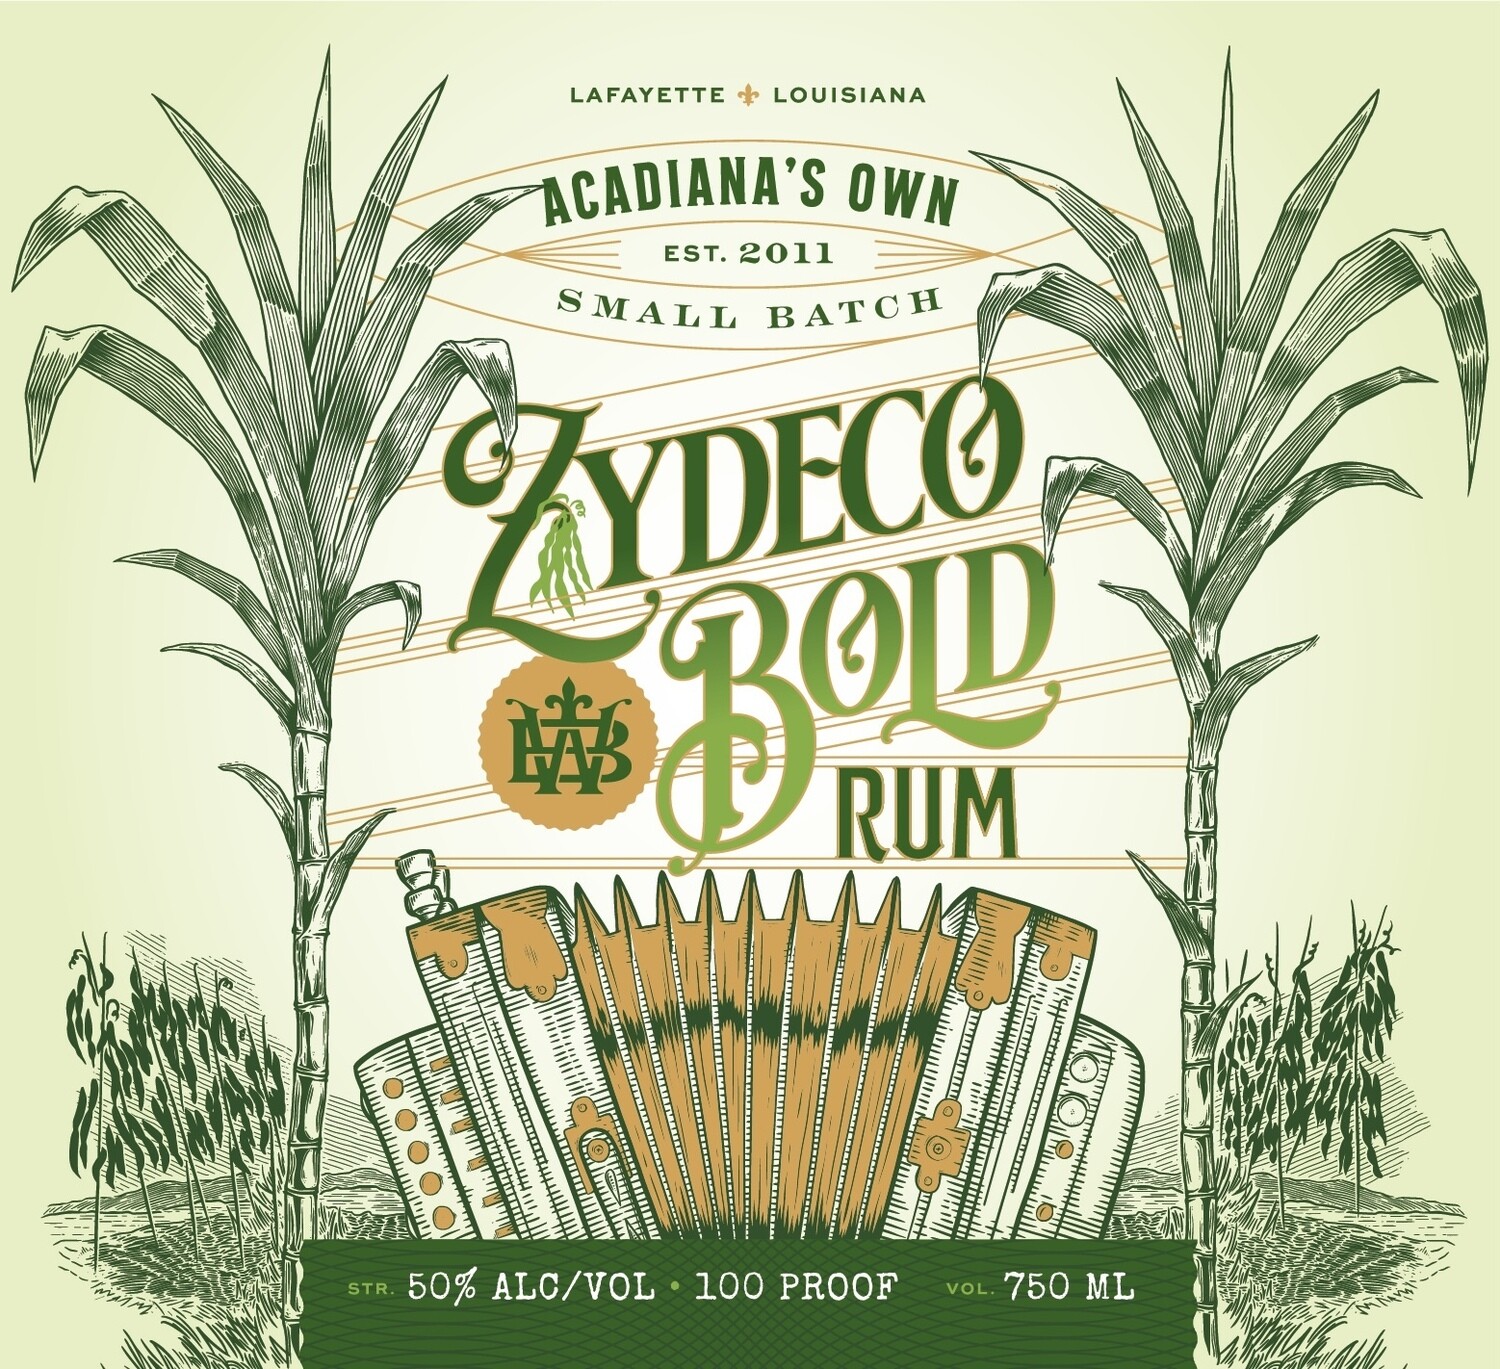 Zydeco Bold 100 Proof Rum